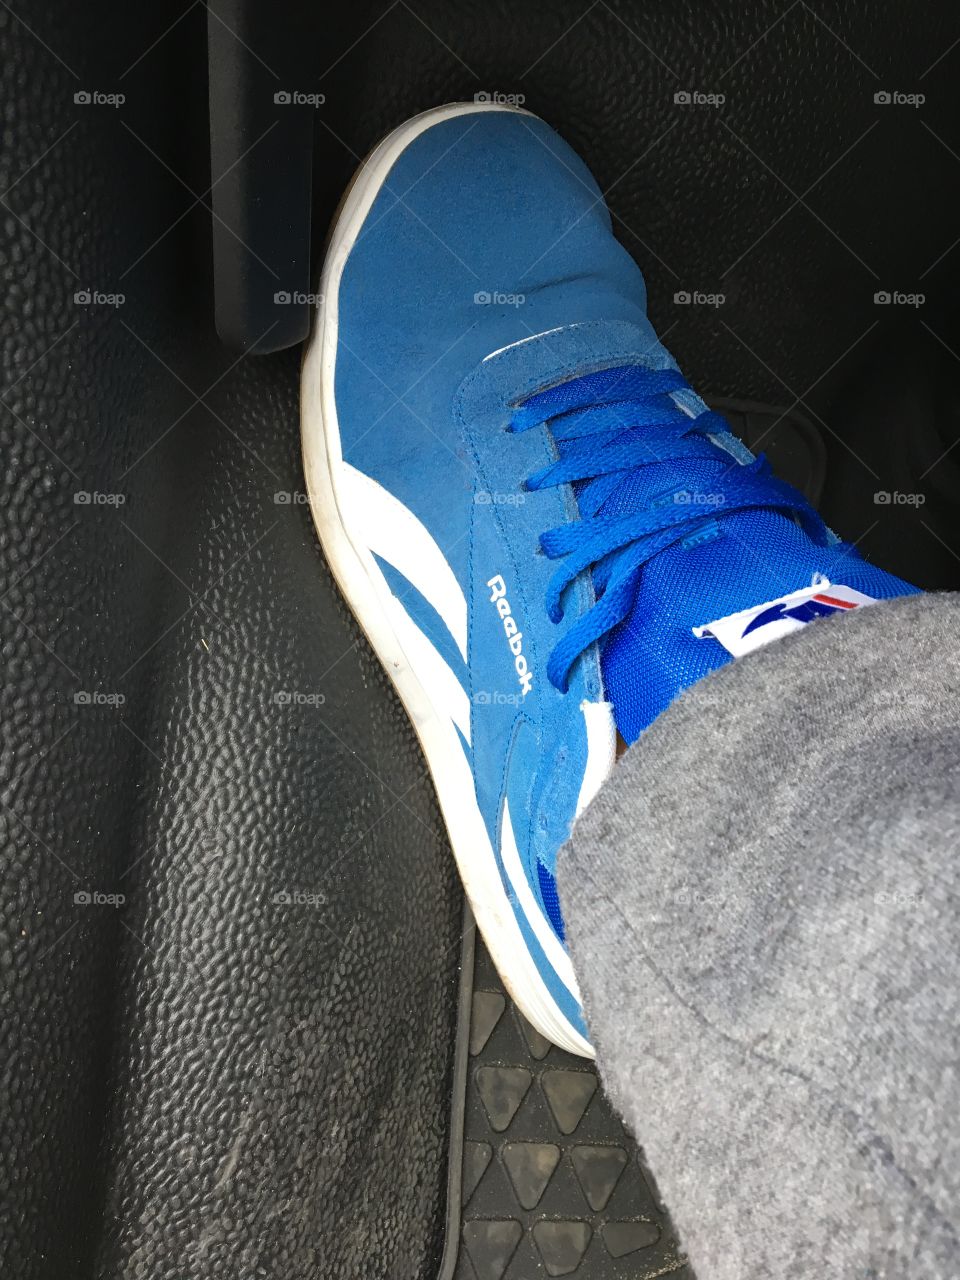 Nice blue shoe 